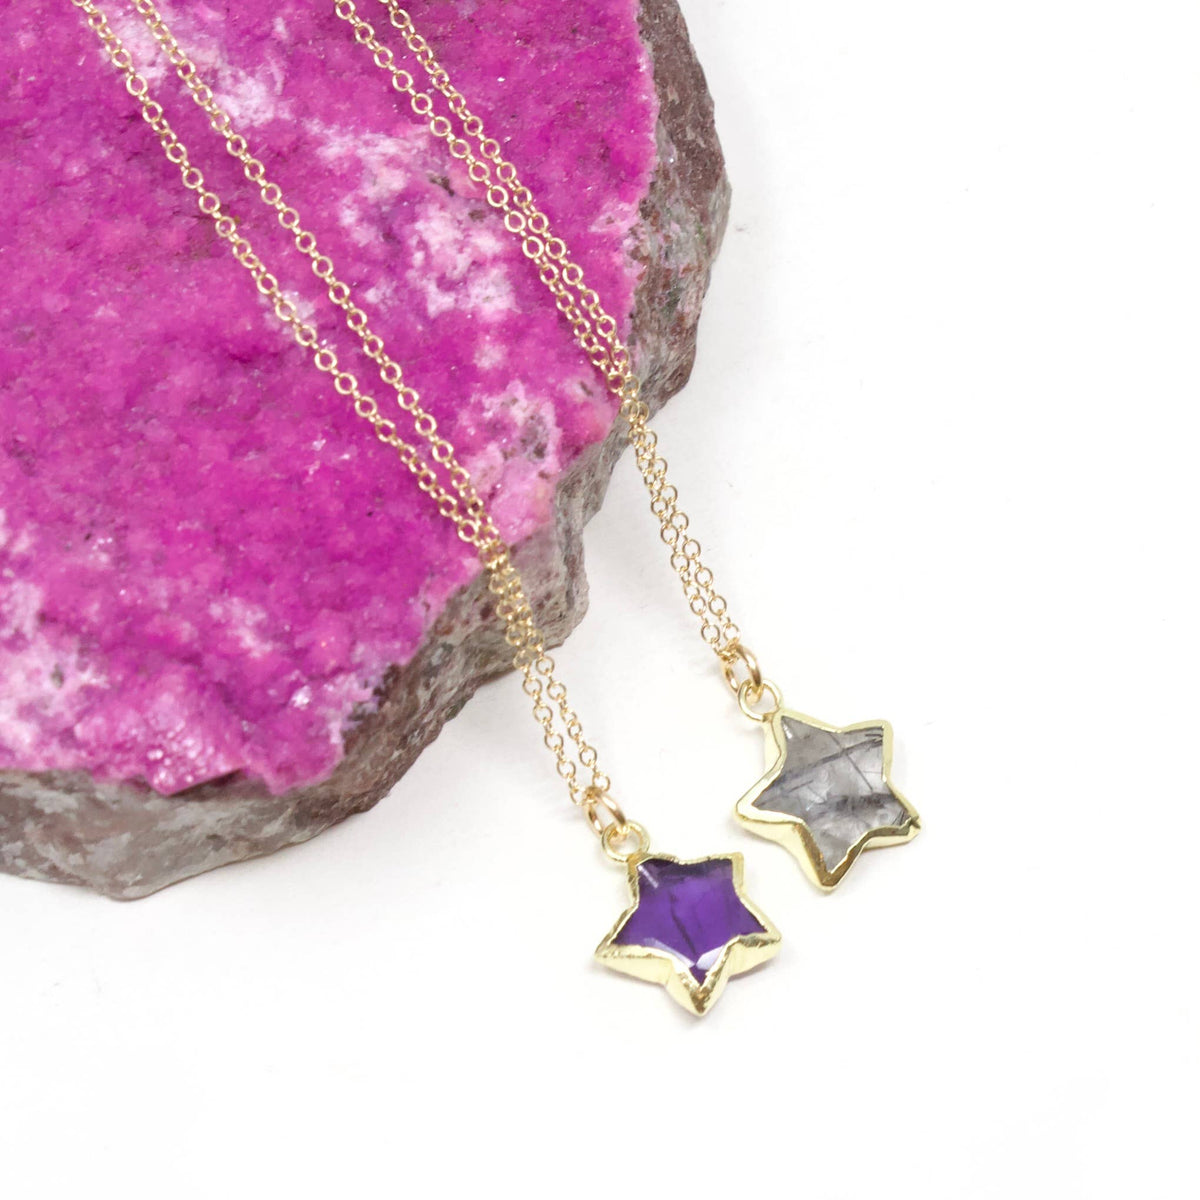 Star Necklace - Gemstone: Moonstone